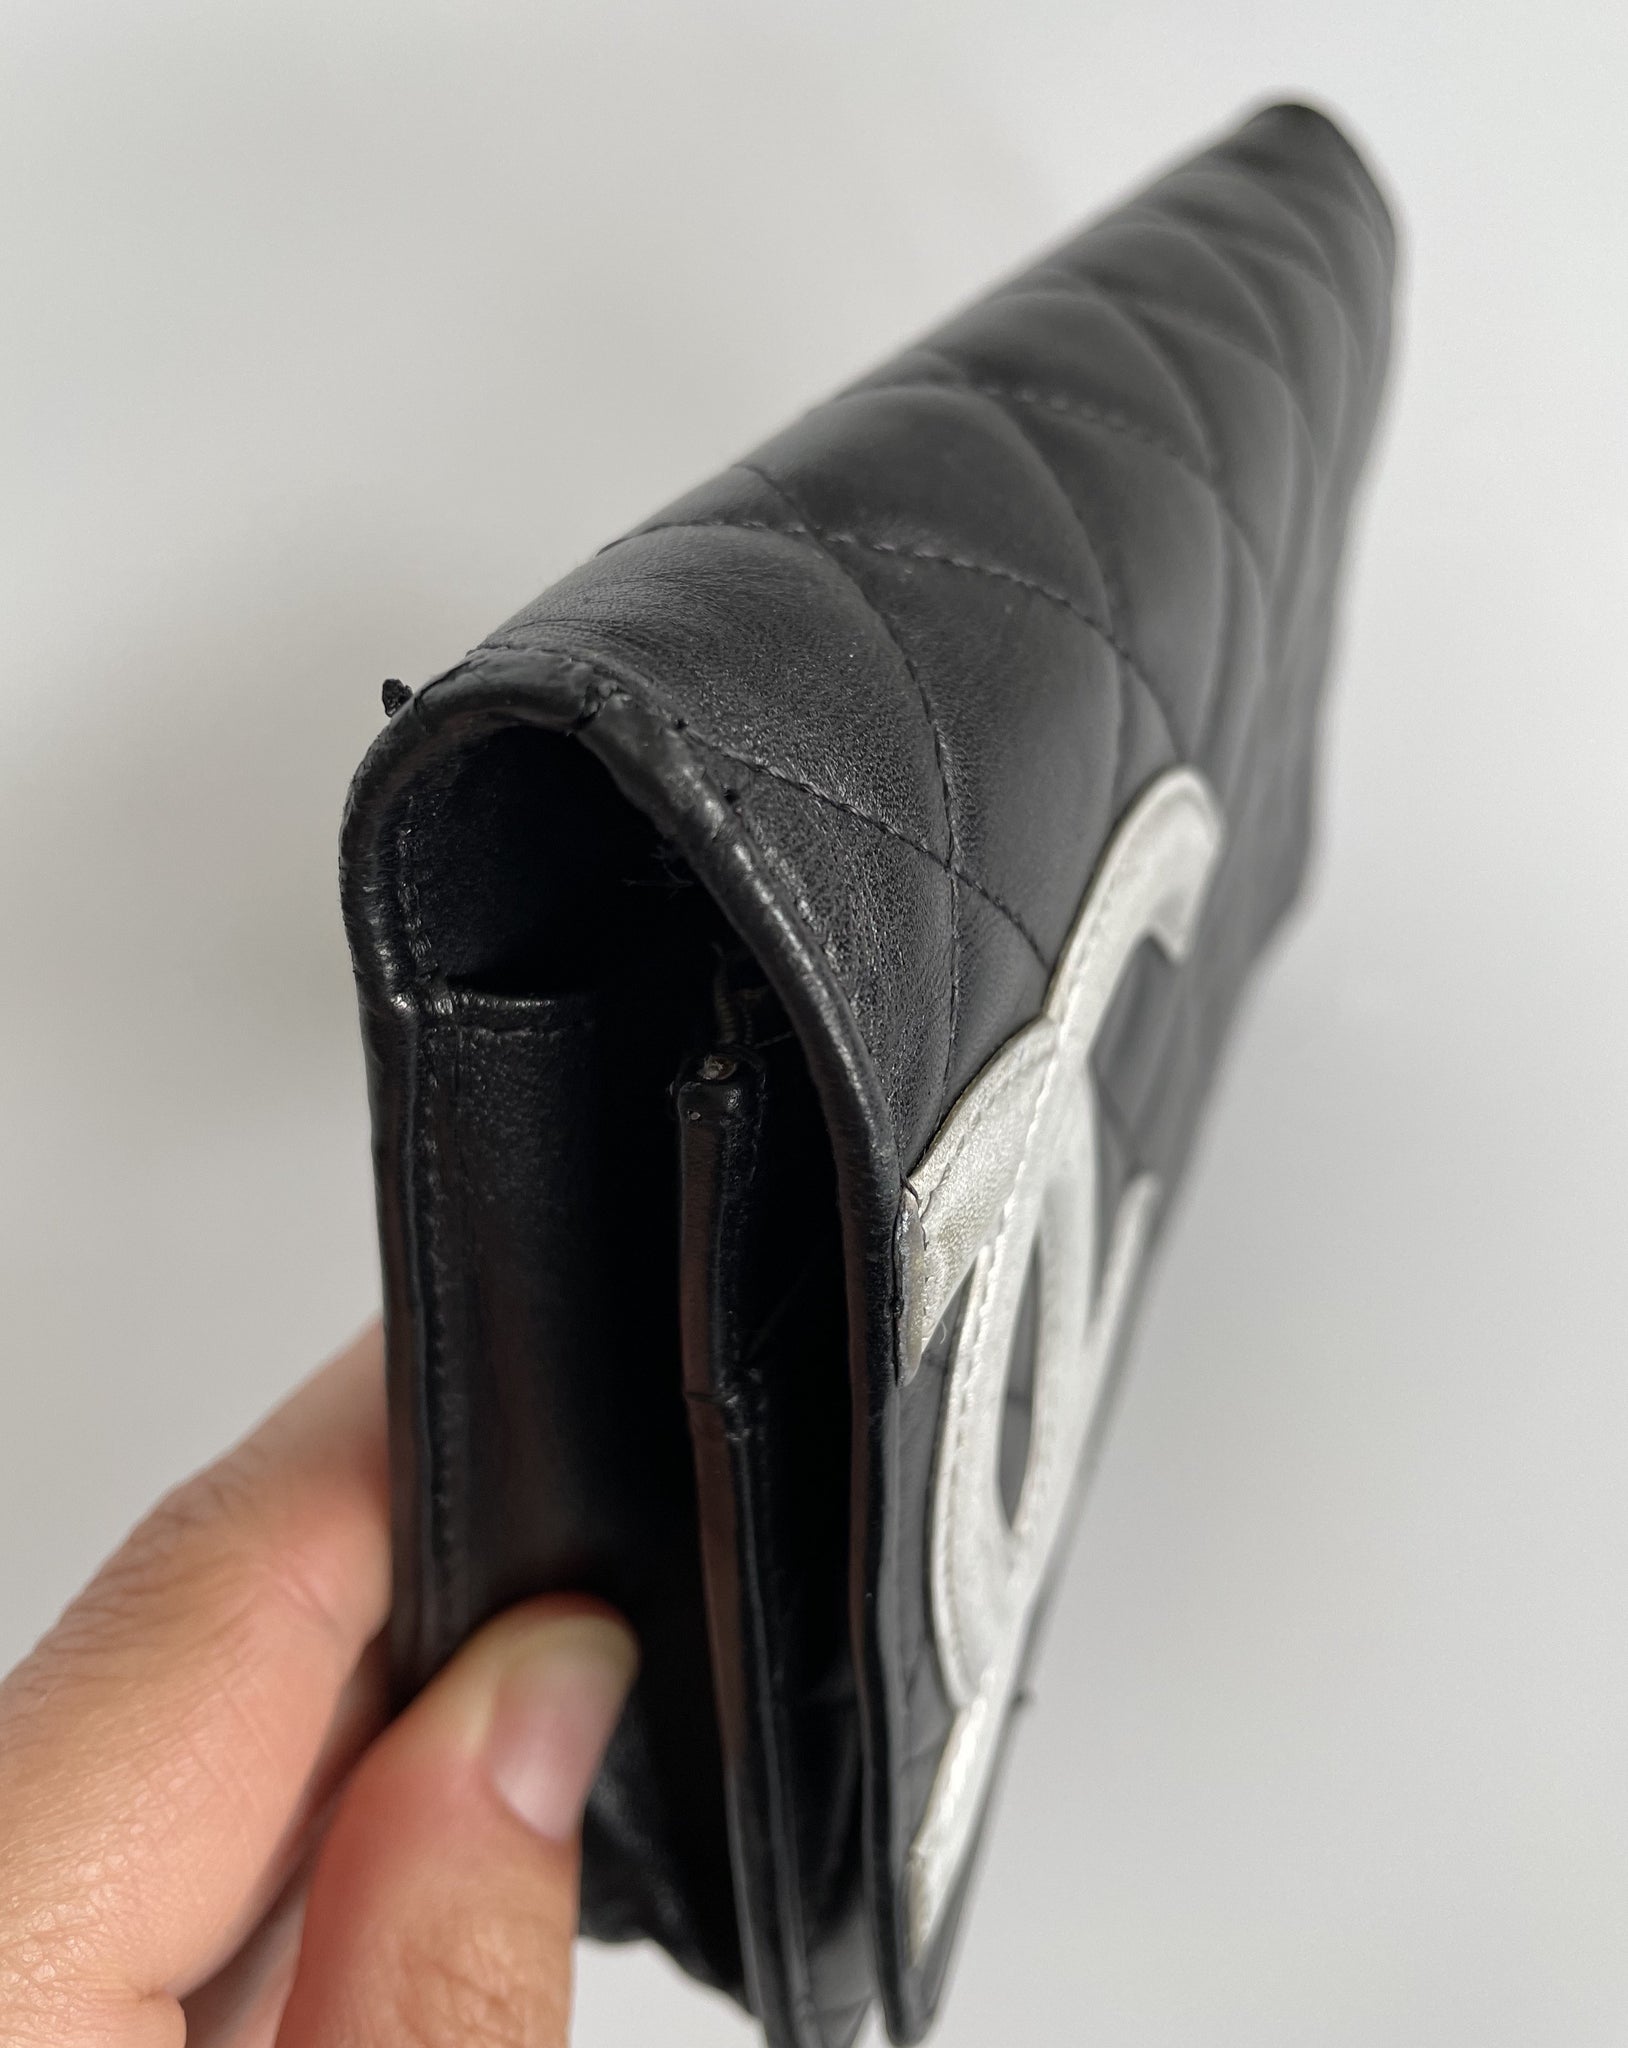 chanel wallet black